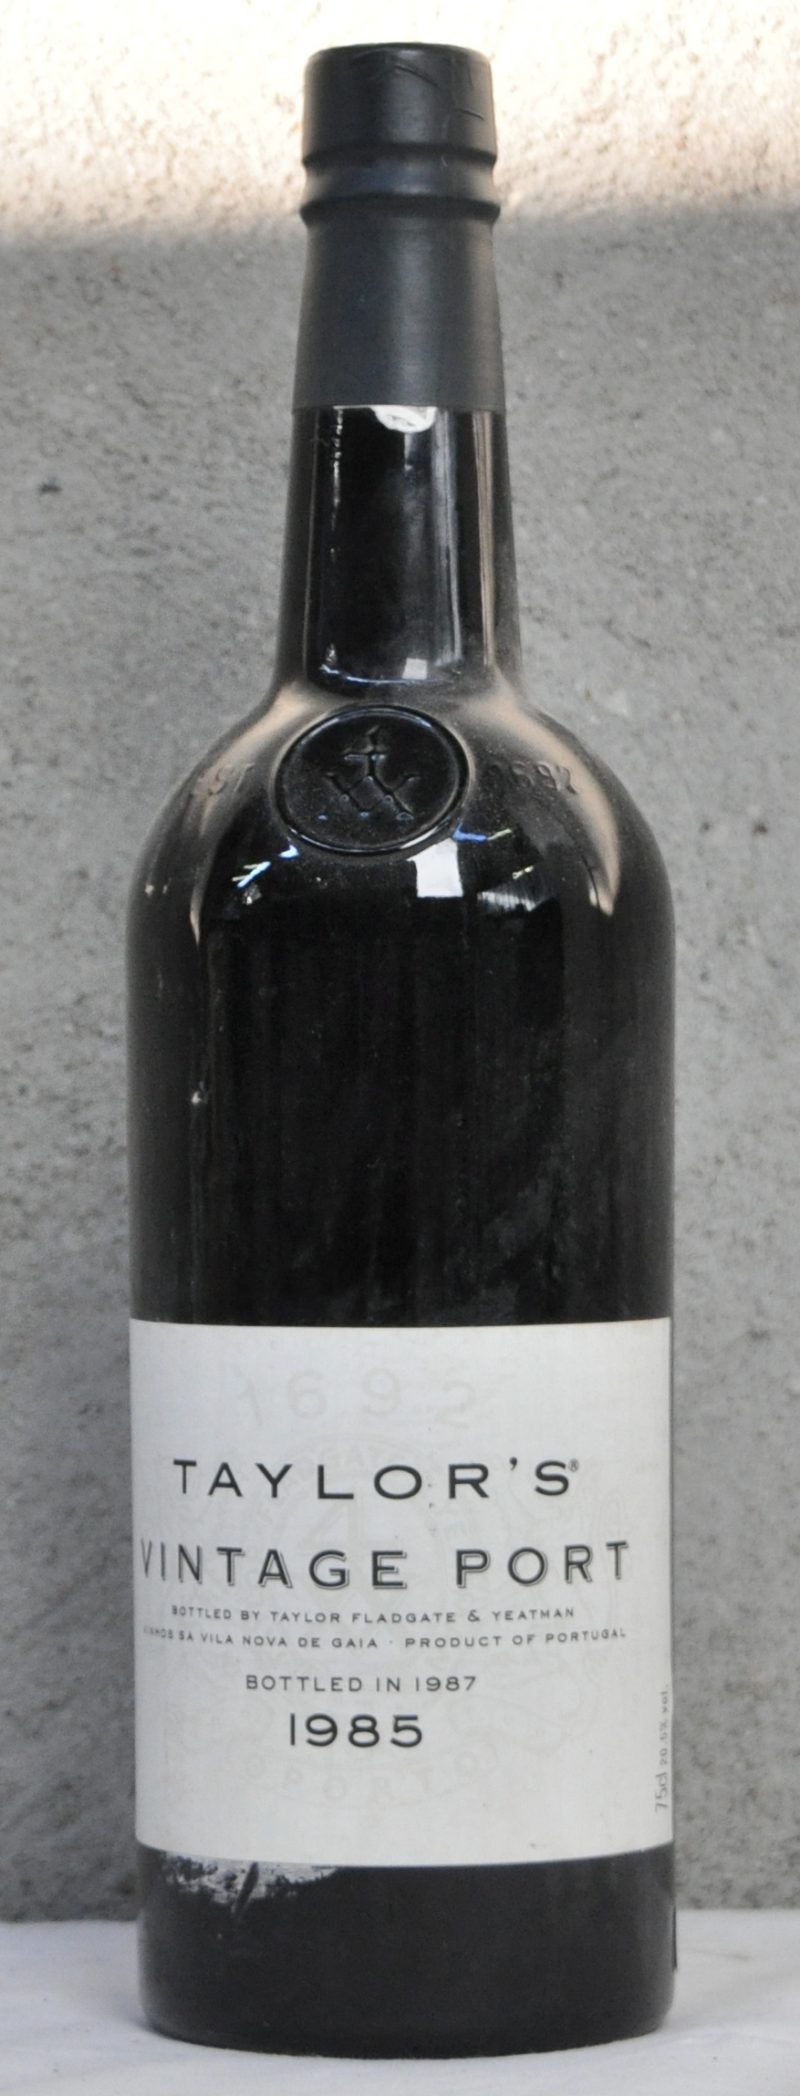 Taylor’s Vintage Port Bottled in 1987  Taylor Fladgate & Yeatman, Vila Nova de Gaia M.O.  1985  aantal: 1 bt